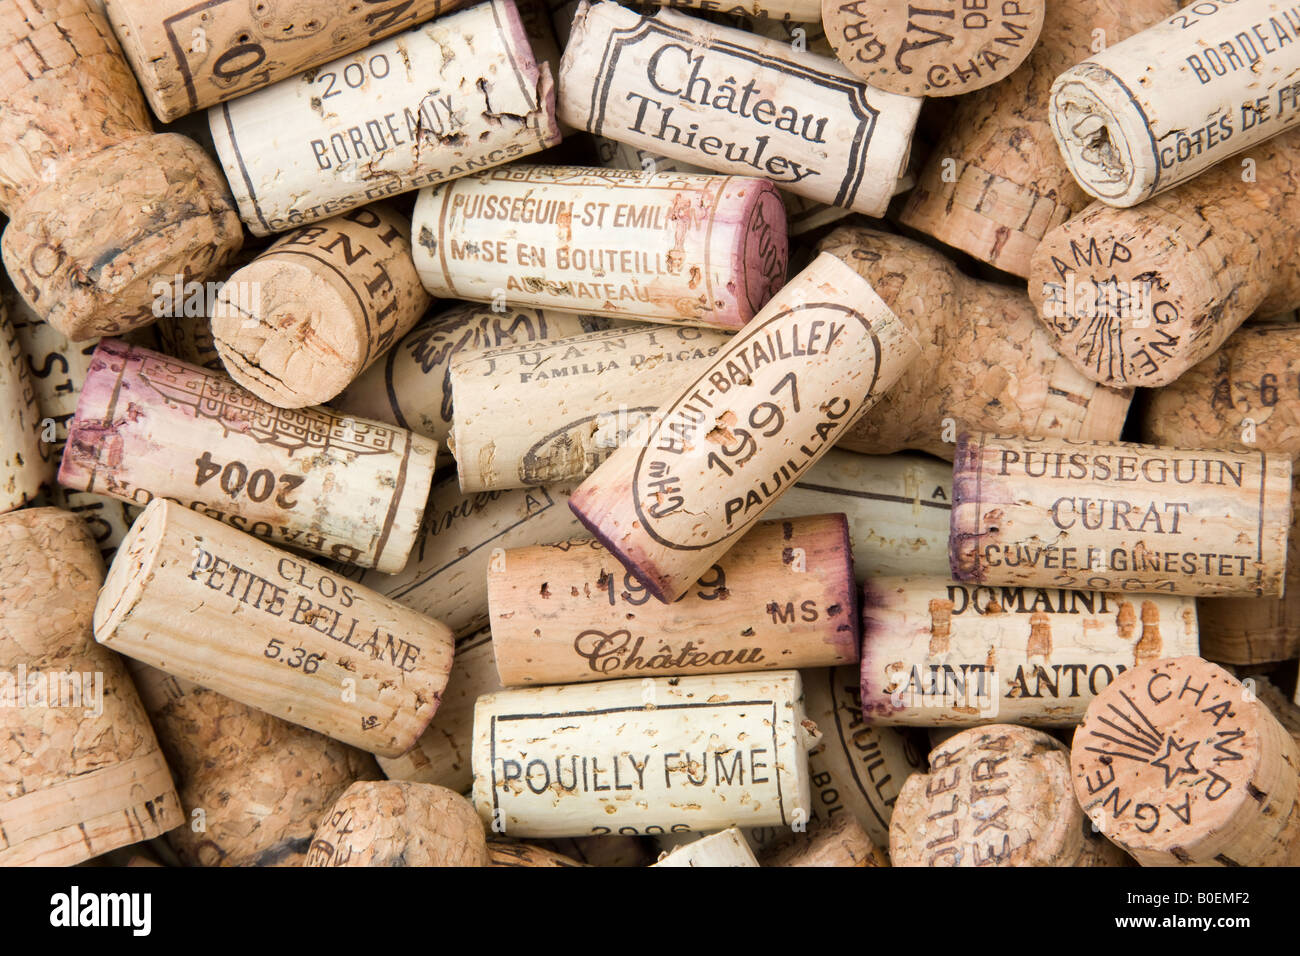 Wine bottle corks Stock Photo